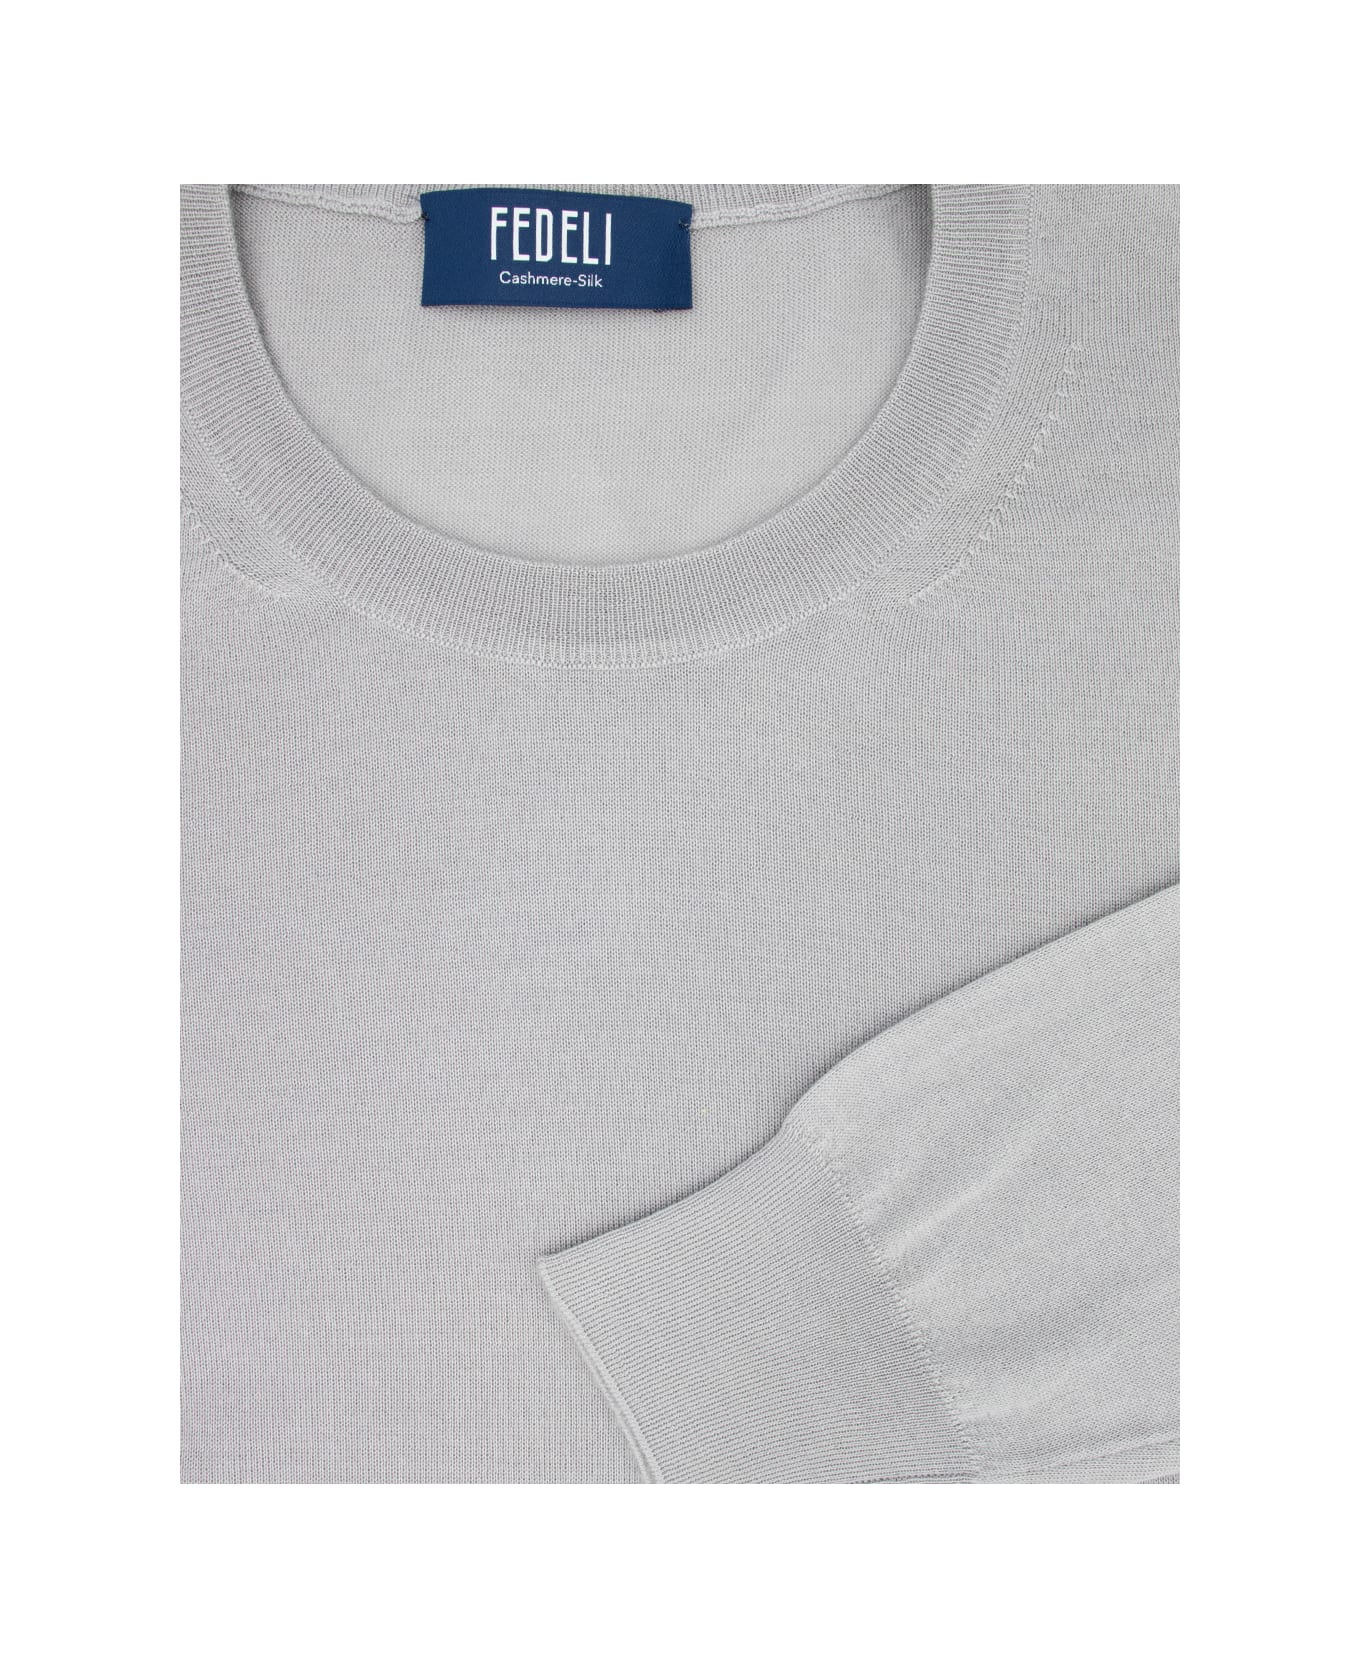 Fedeli Sweater - 36 フリース